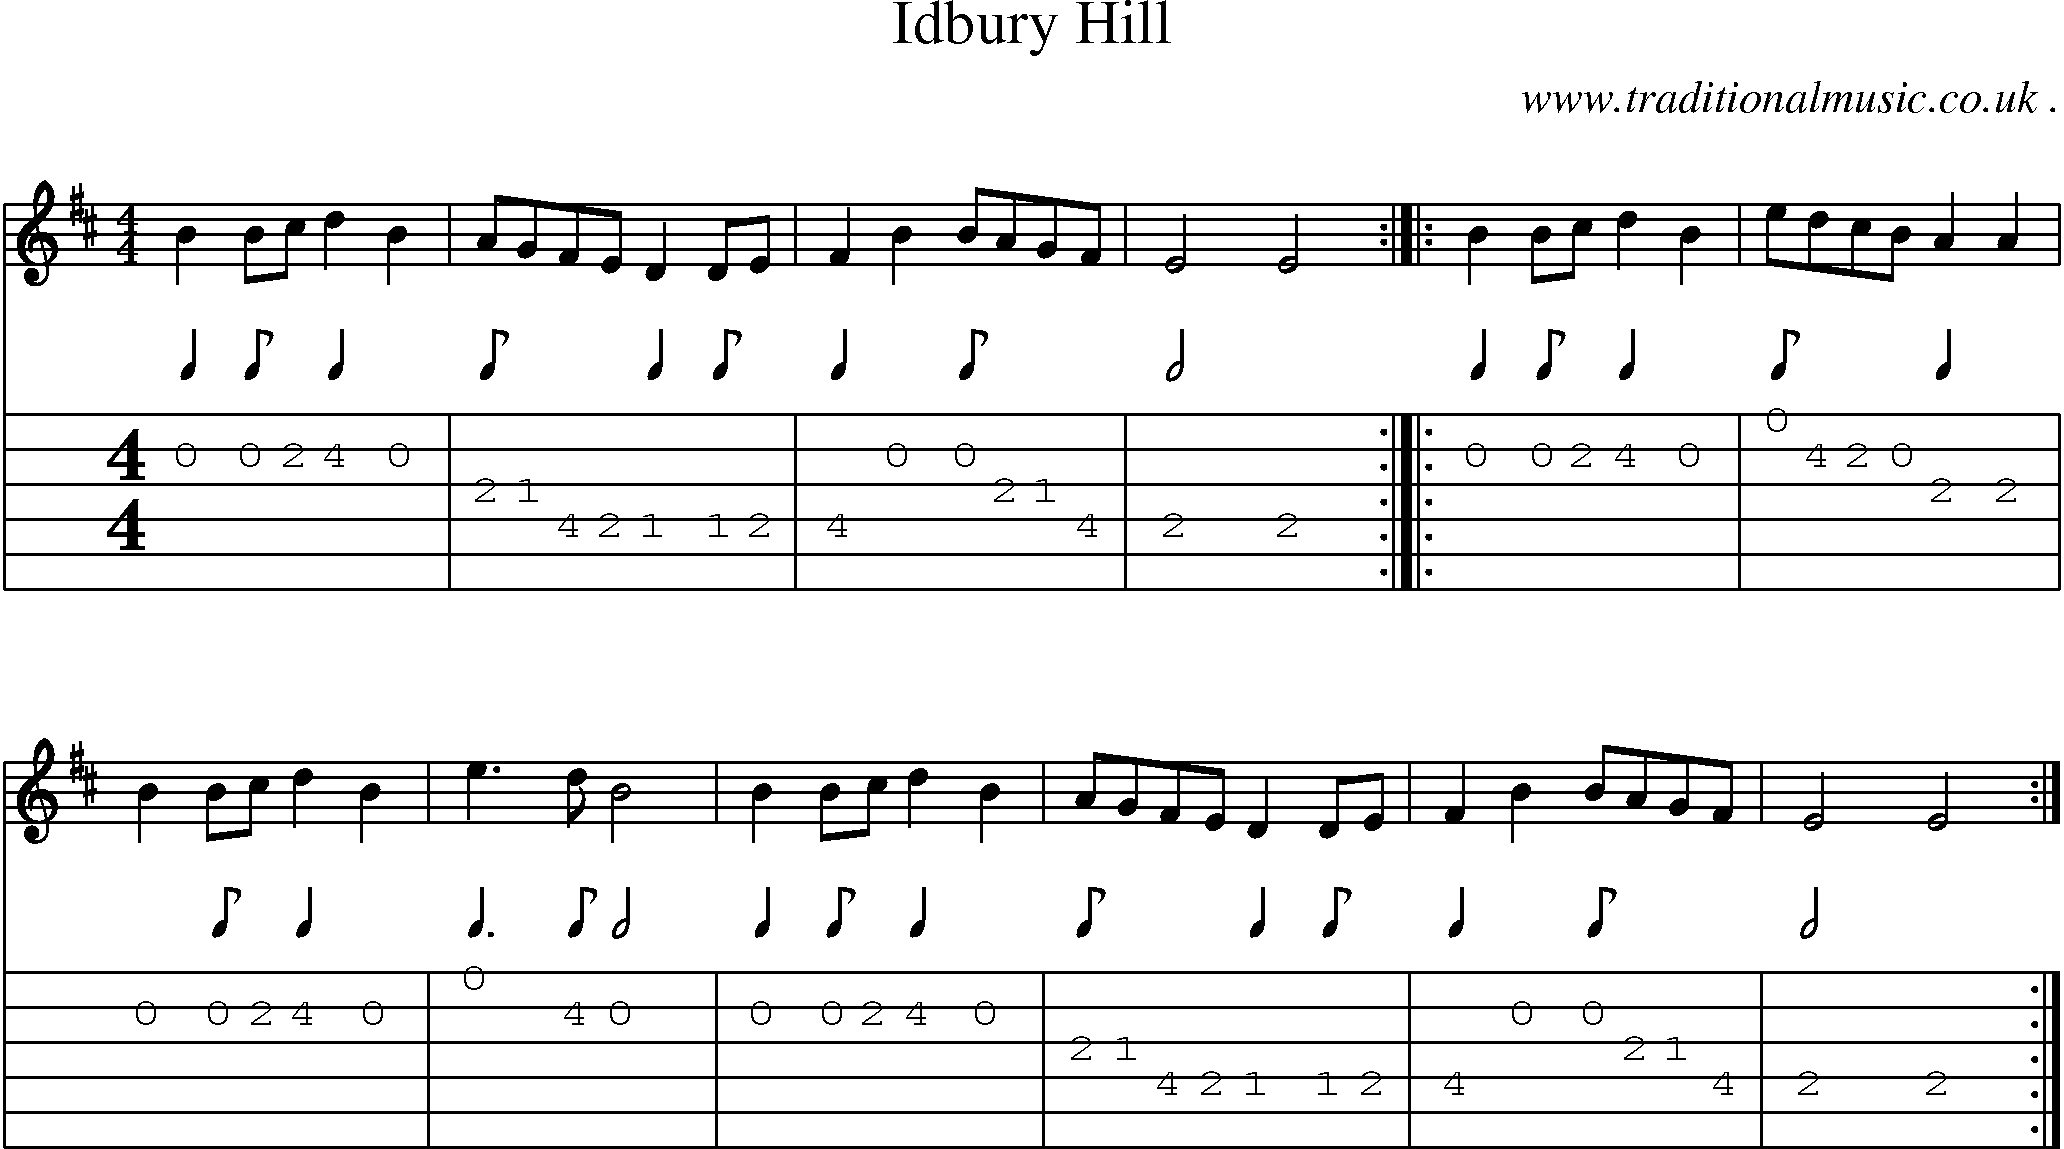 Sheet-Music and Guitar Tabs for Idbury Hill